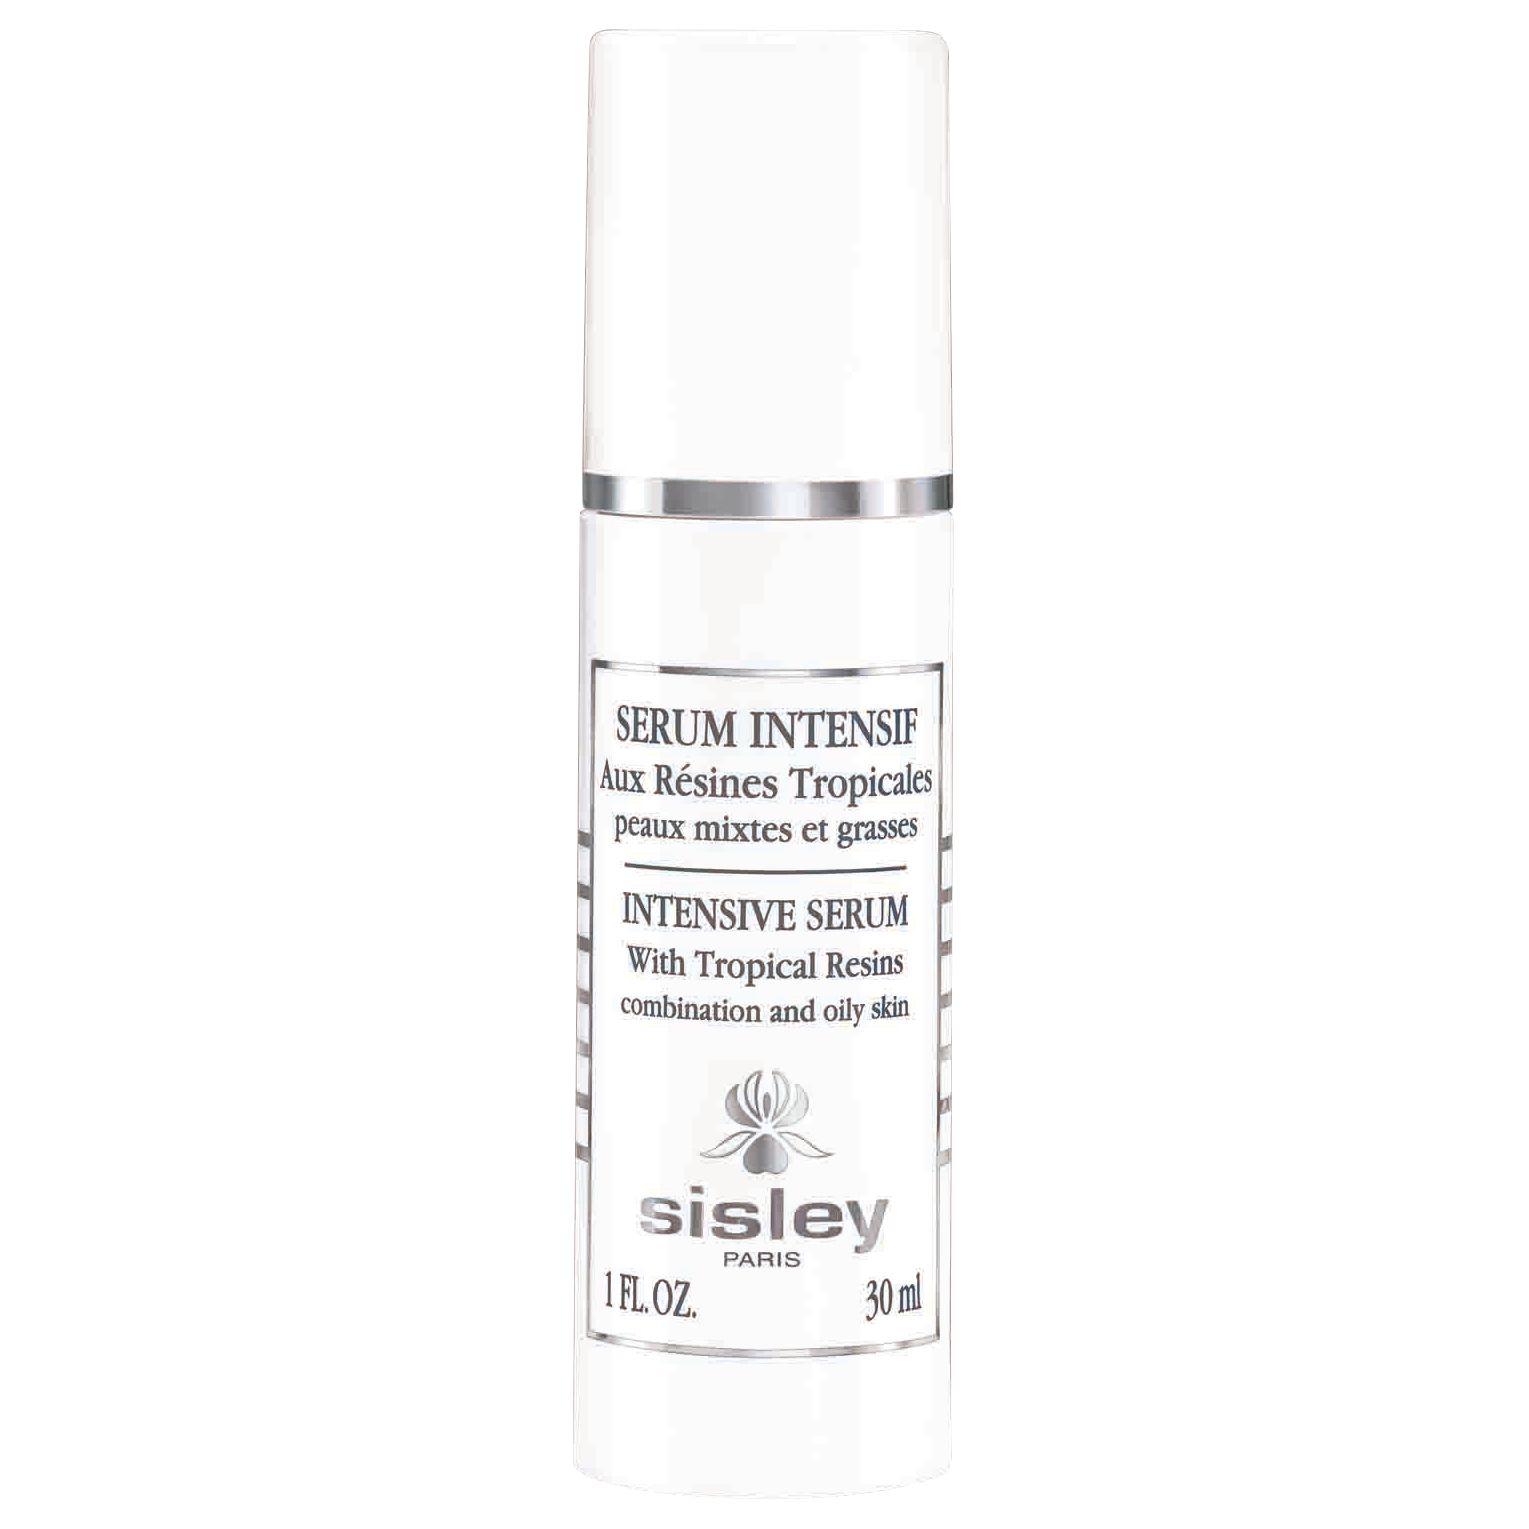 Sisley-Paris Intensive Serum with Tropical Resins, 30ml 1